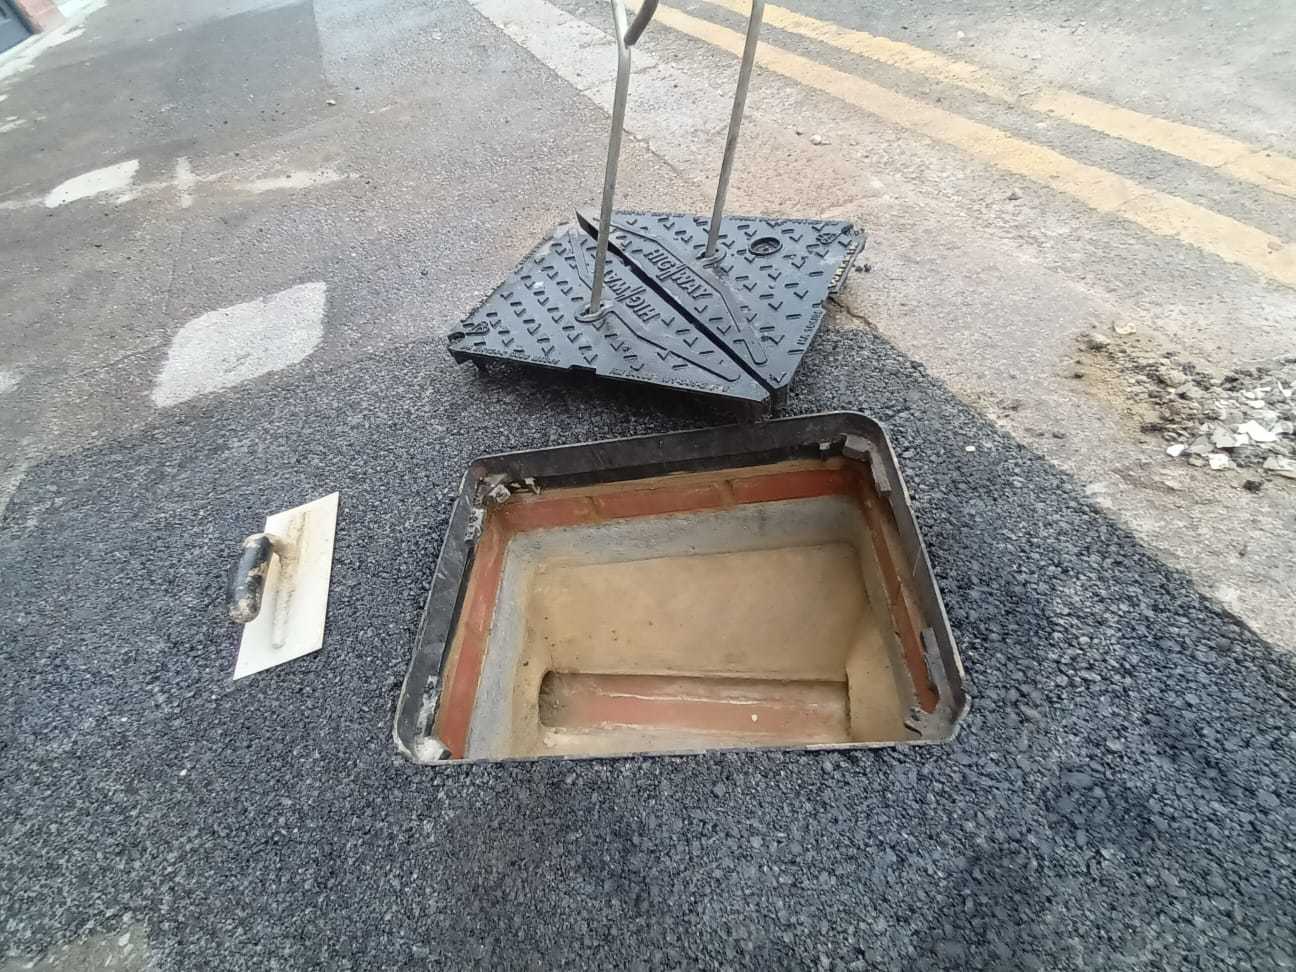 New demarcation manhole